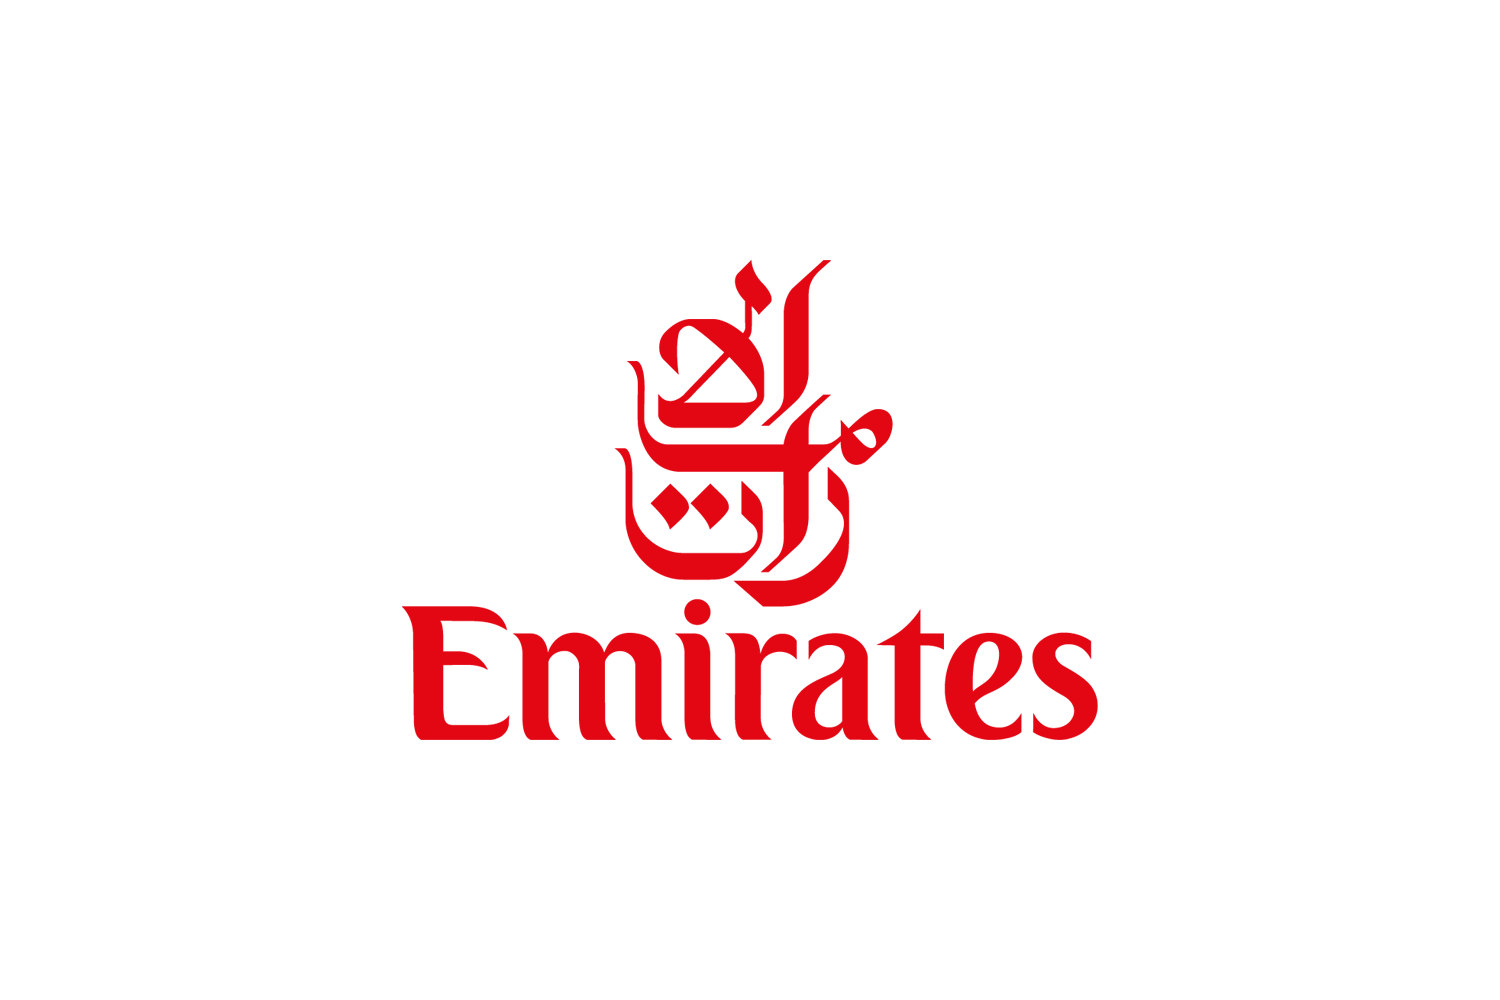 https://visit-sarajevo.com/wp-content/uploads/2020/02/Emirates-logo.png